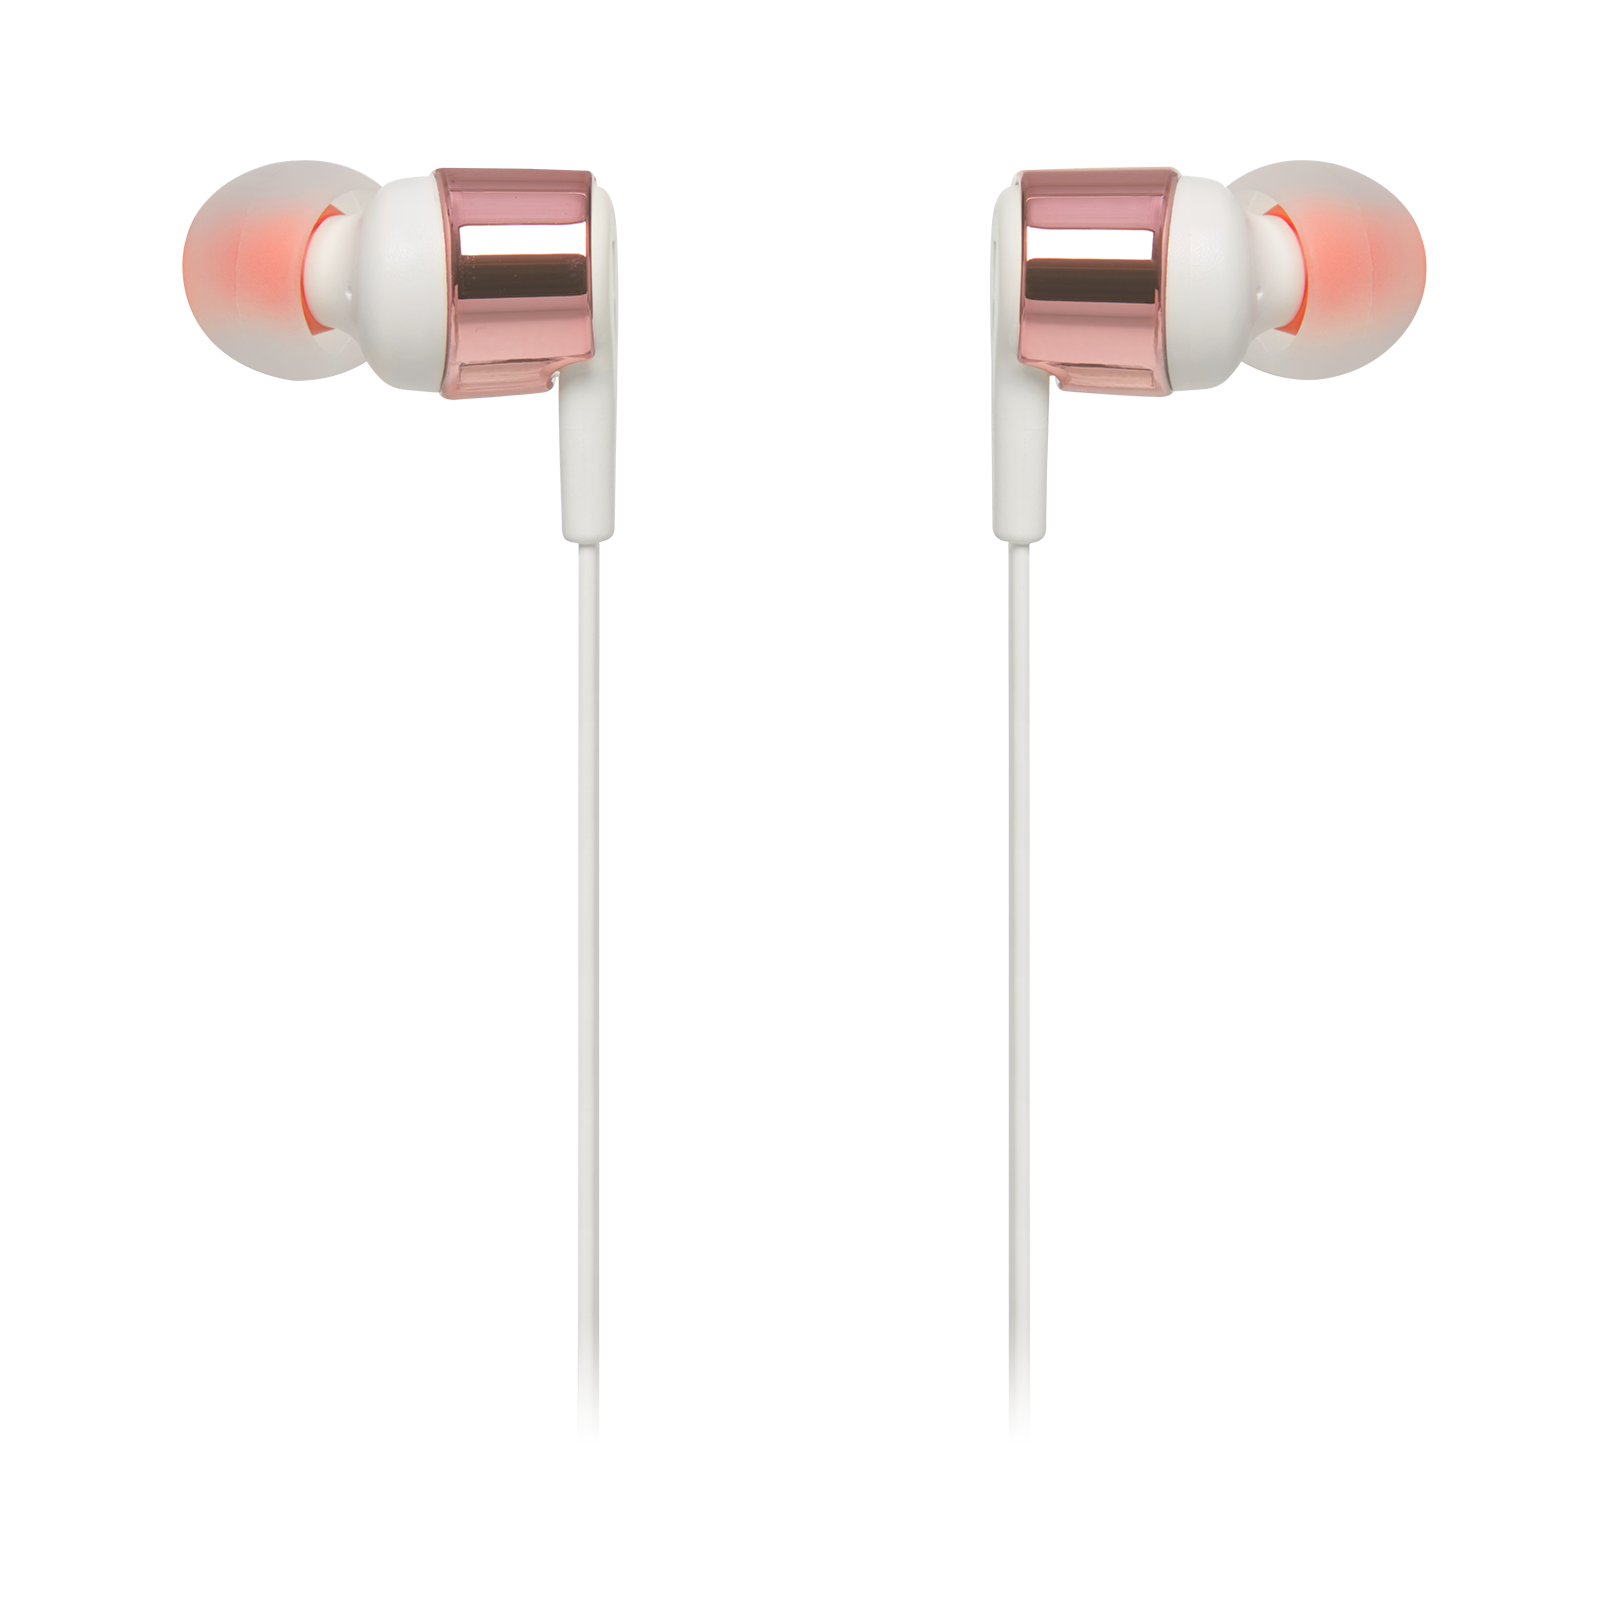 JBL Tune 210 - Rose Gold - In-ear headphones - Detailshot 1